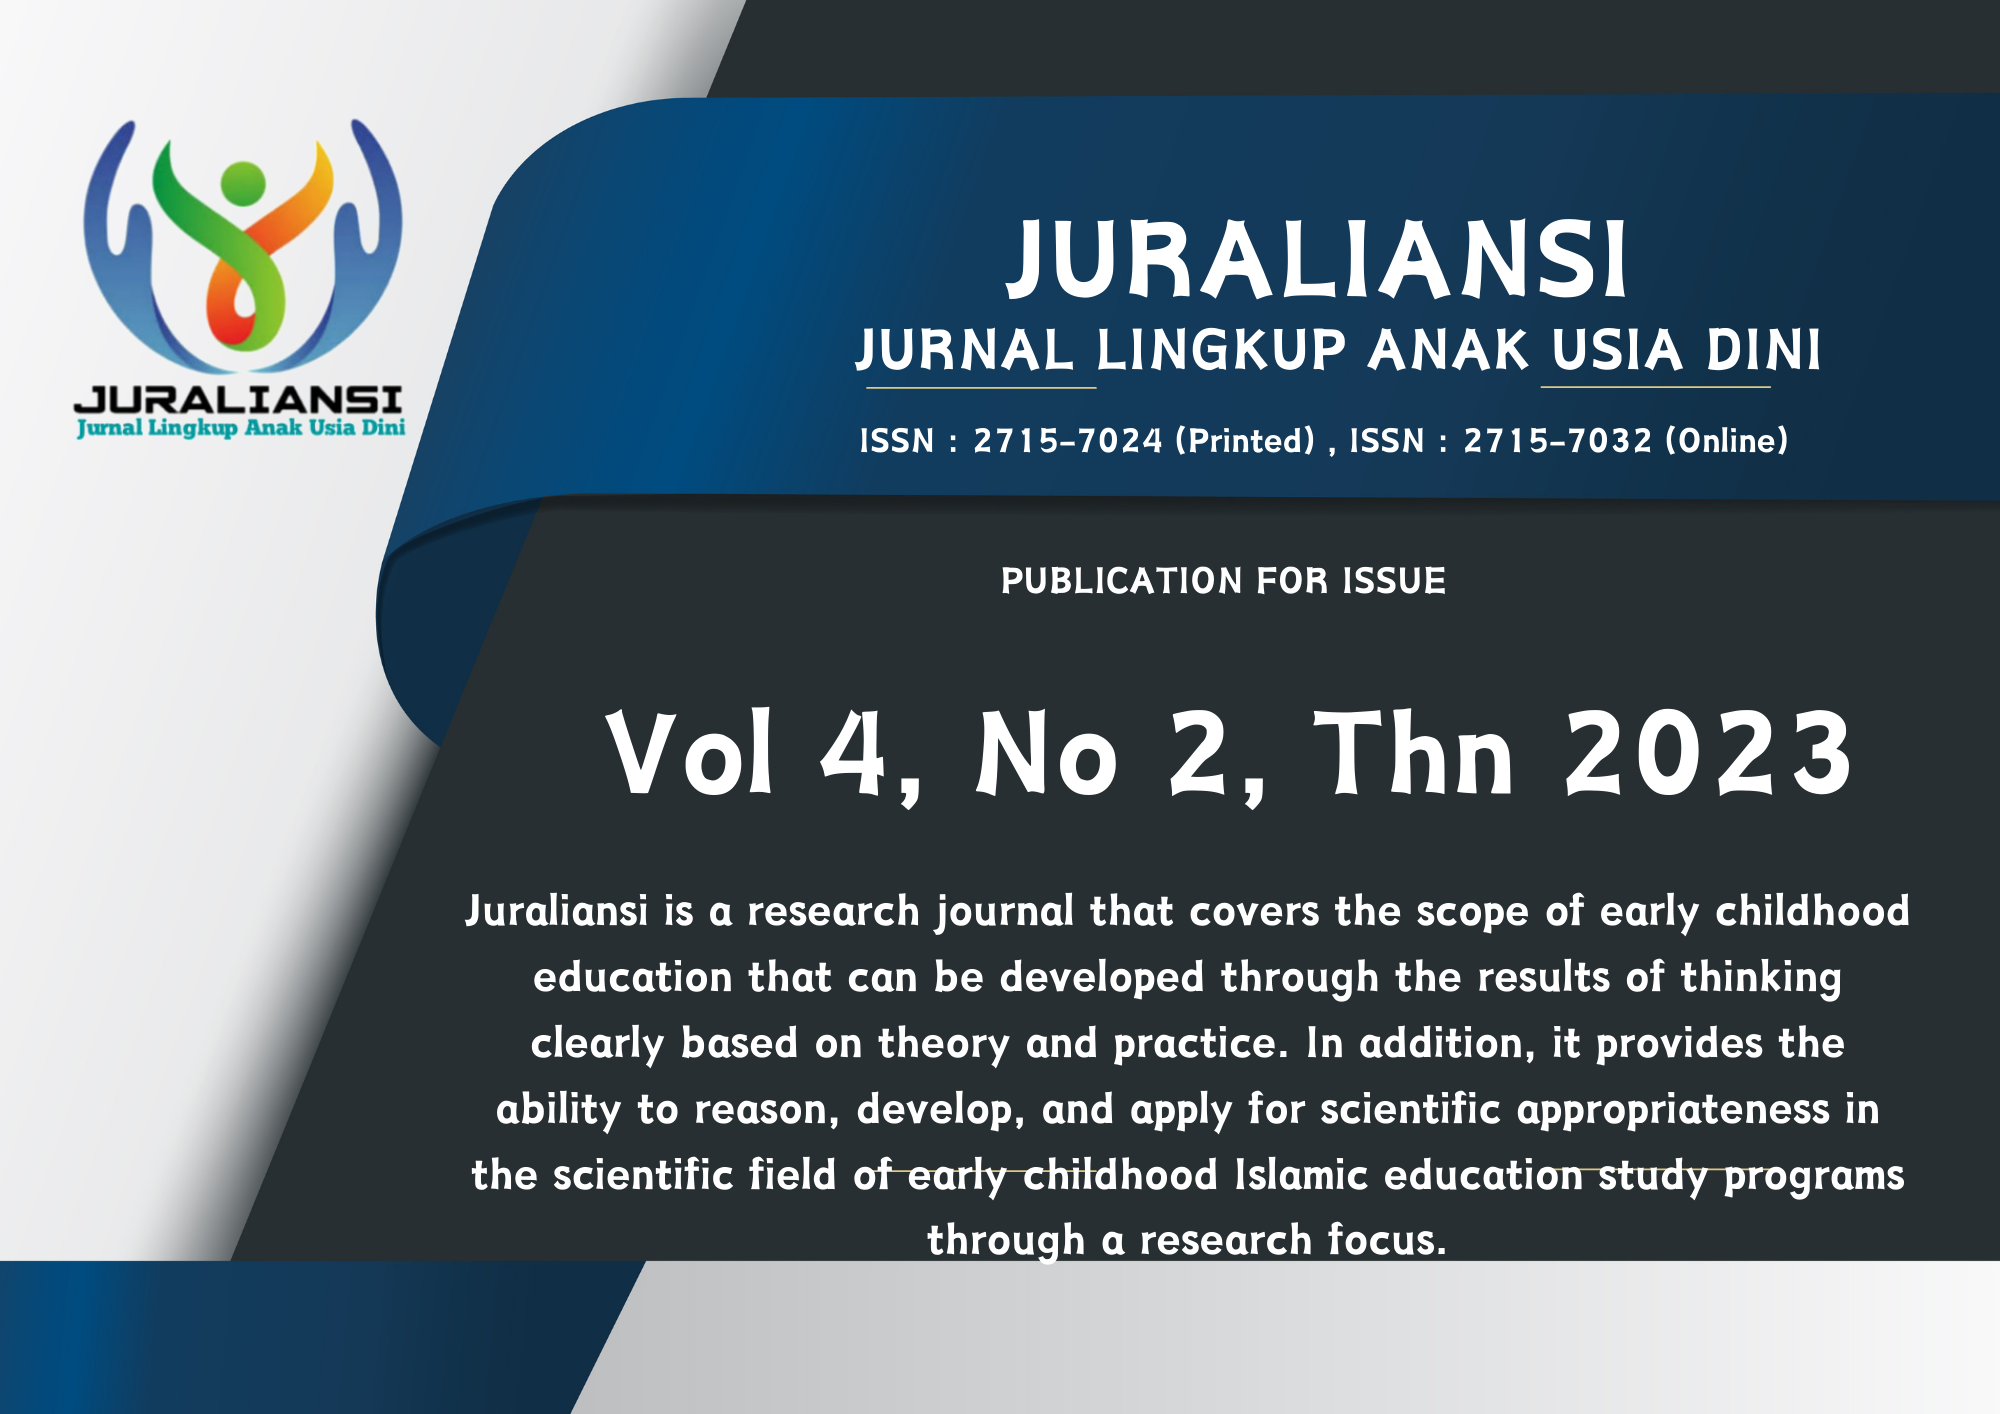 					View Vol. 4 No. 2 (2023): JURALIANSI (JURNAL LINGKUP ANAK USIA DINI) 
				